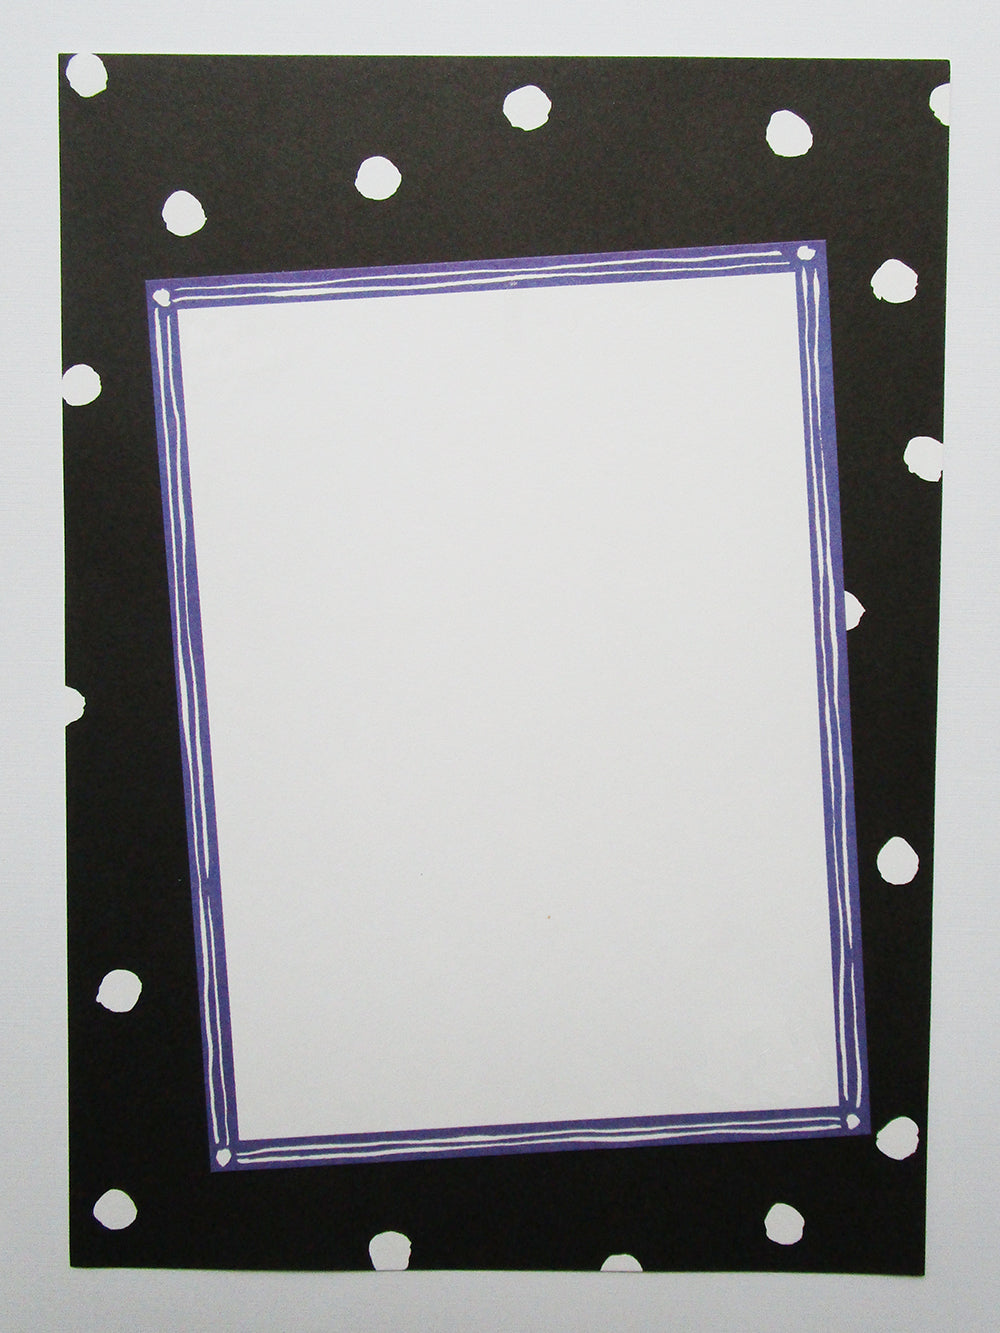 Black and White polka dot border - Designs by Ginny